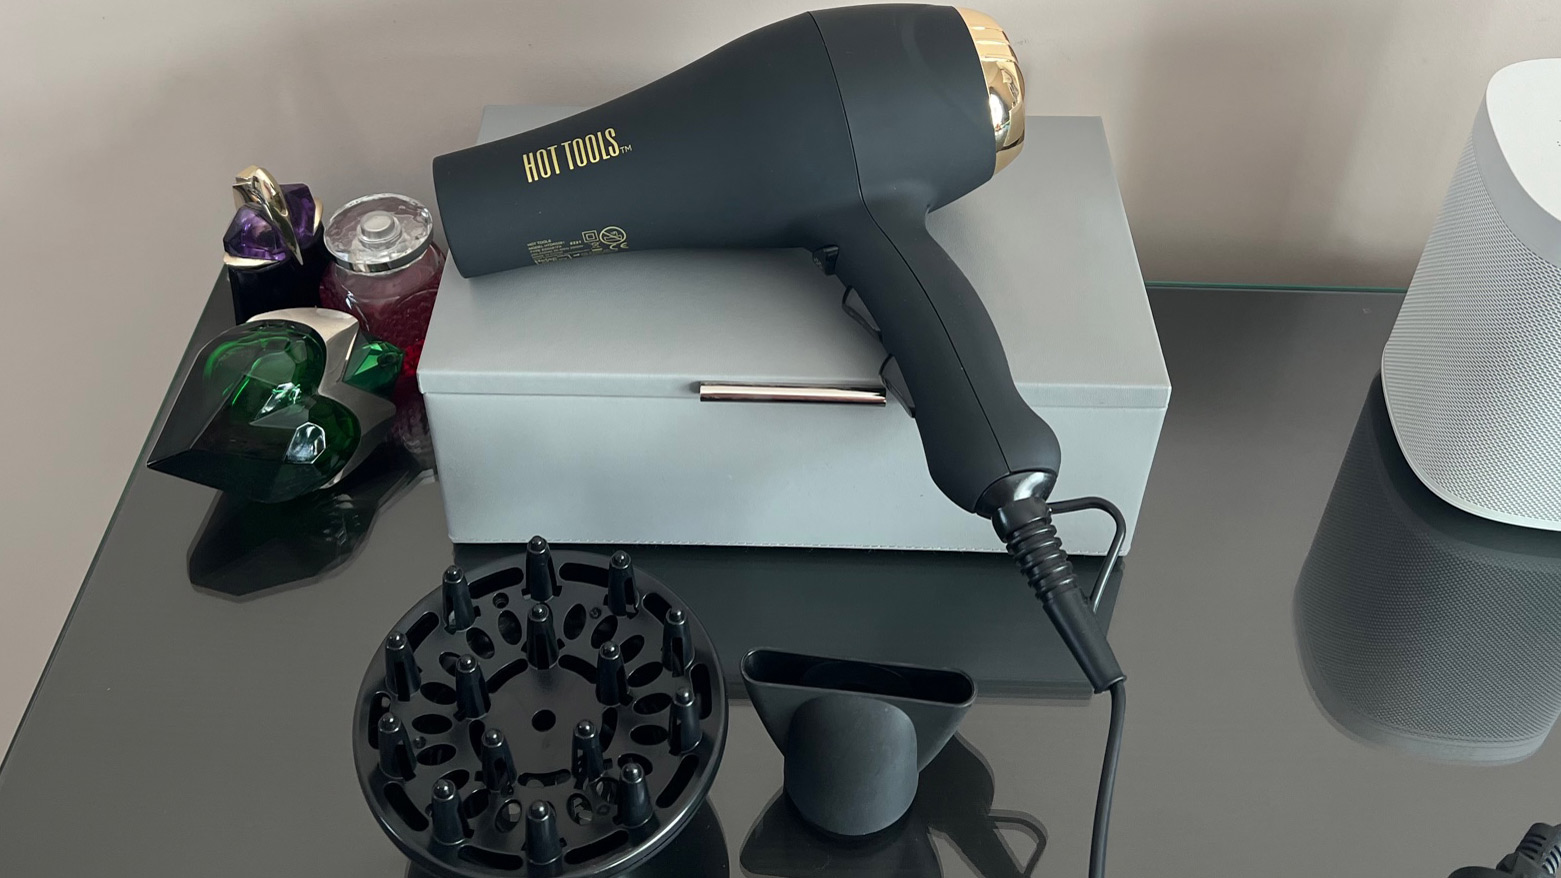 The Hot Tools Pro Signature Salon Ionic AC Motor Hair Dryer pada wadah kulit di permukaan kaca